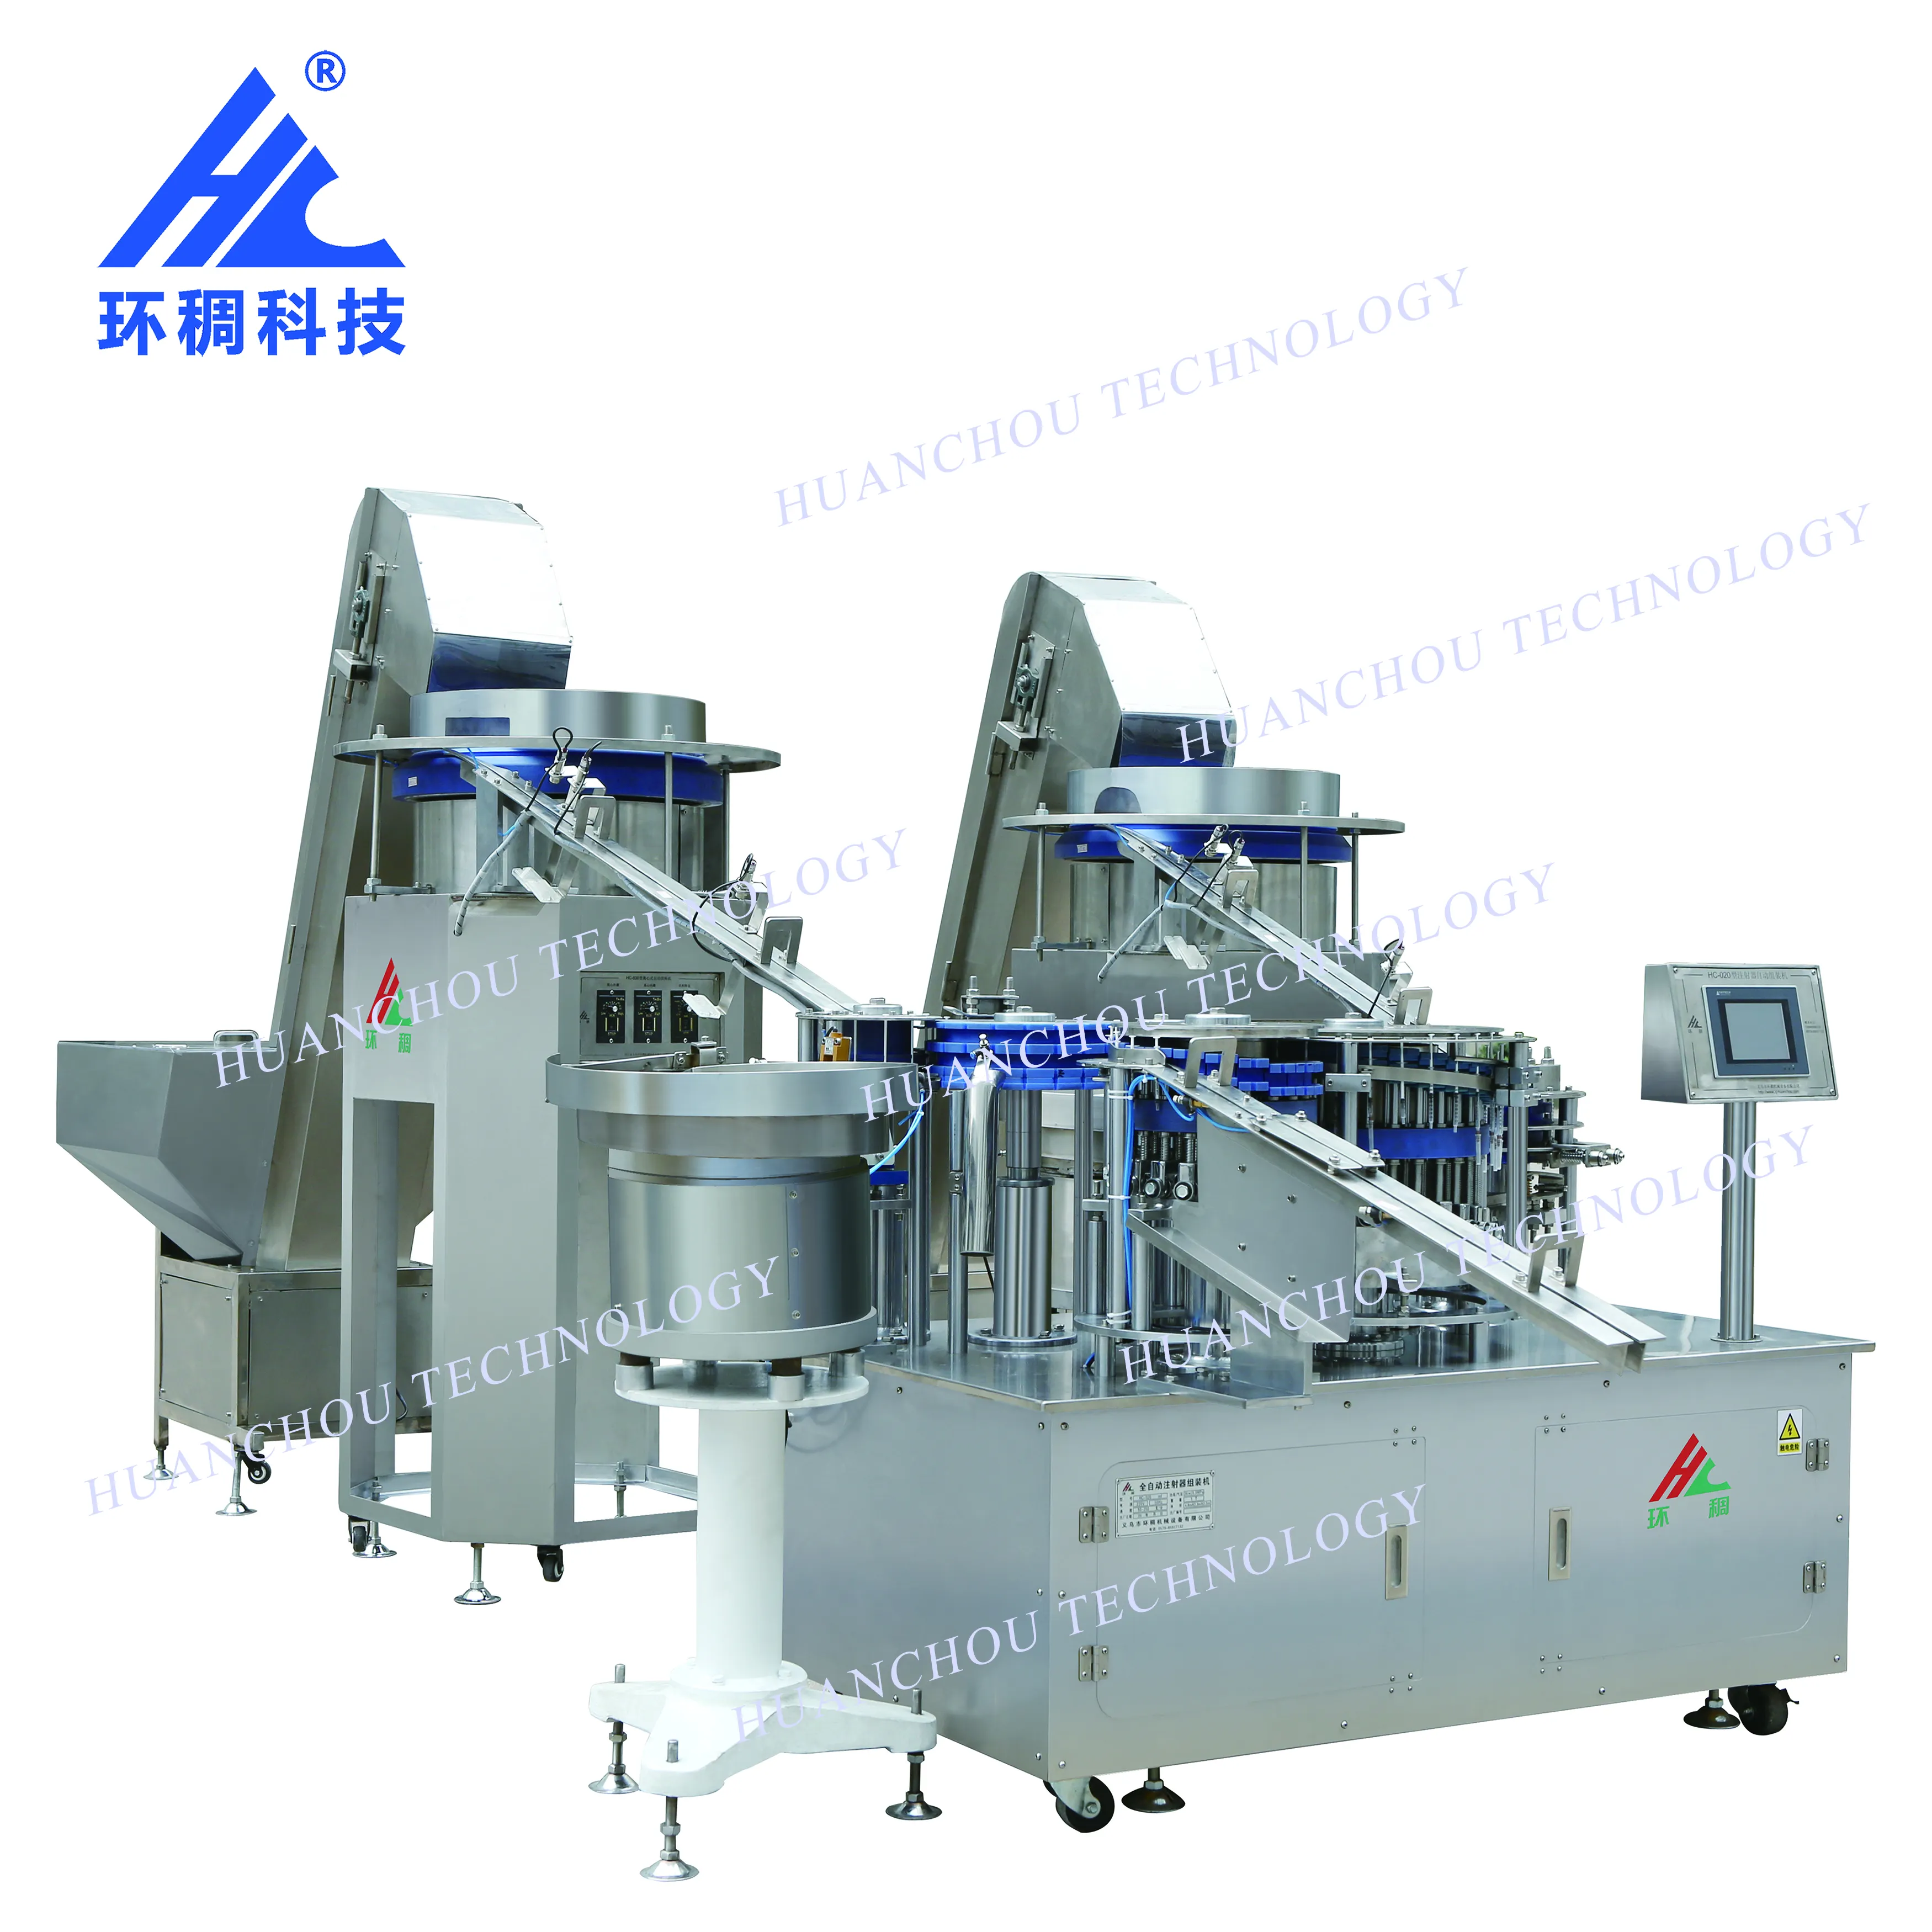 Huanchou Technology High-speed safety syringe assembly machine